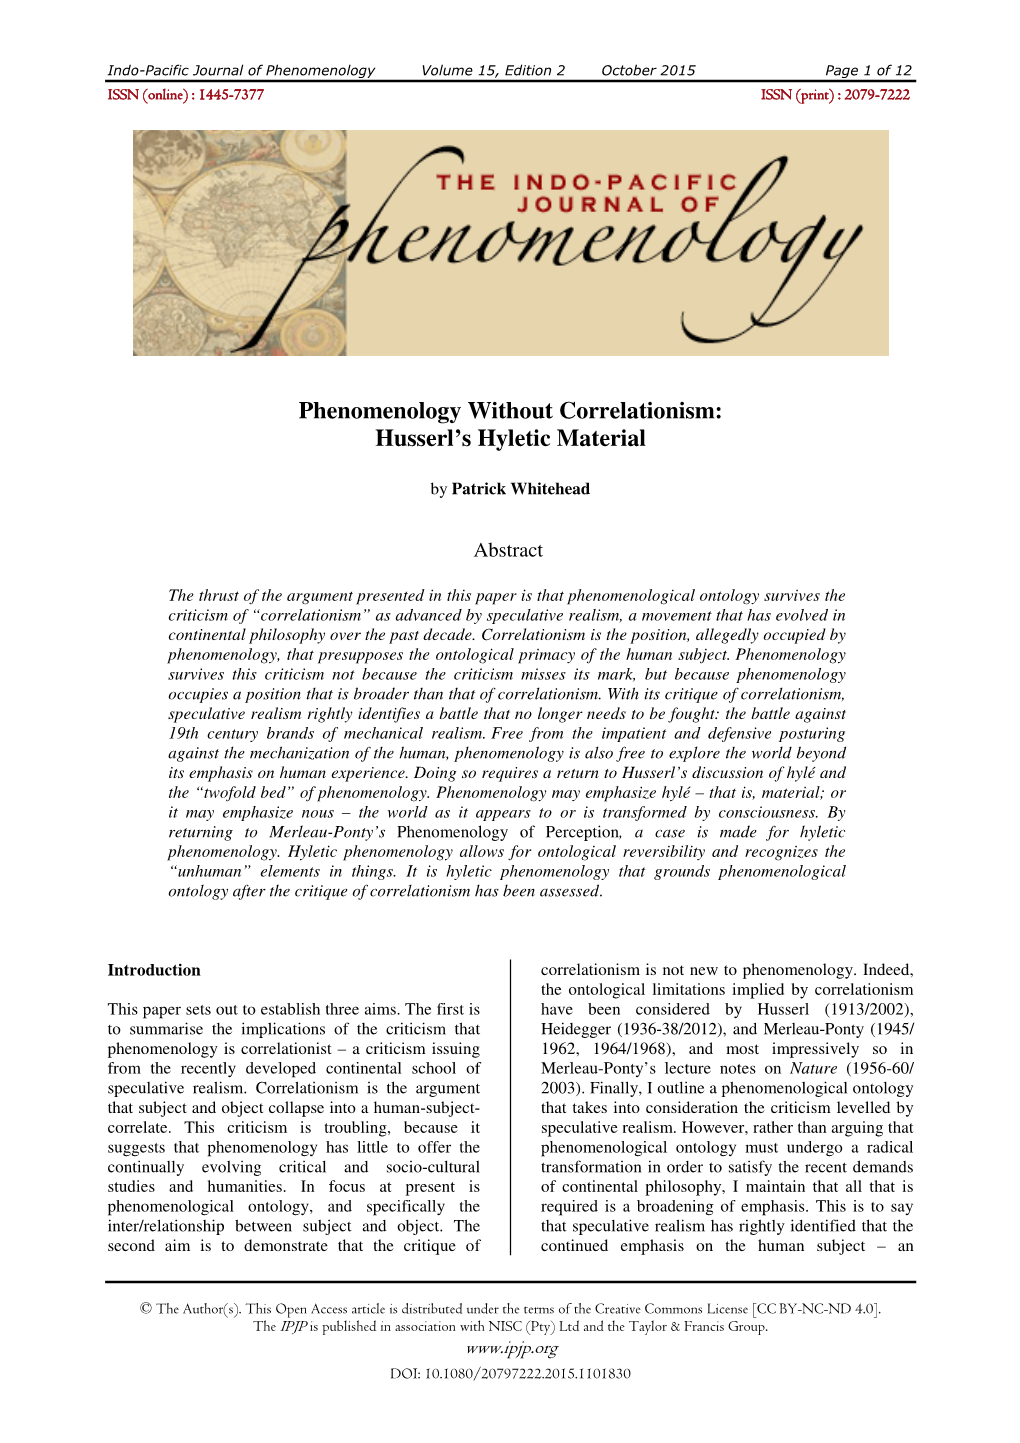 Phenomenology Without Correlationism: Husserl's Hyletic